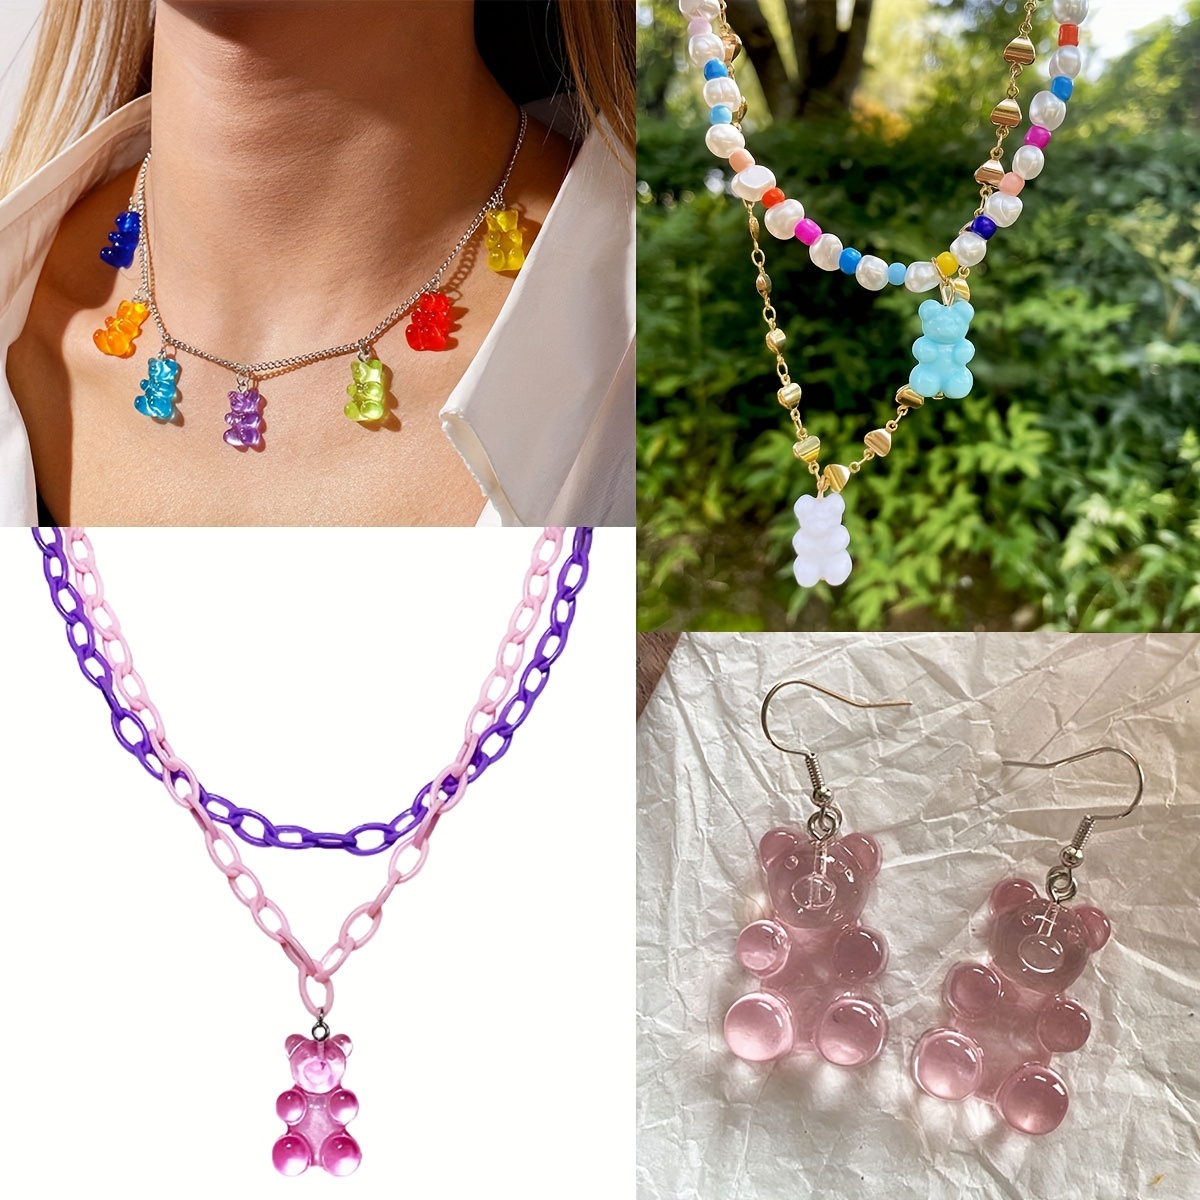 30Pcs/lot Gummy Bear Charms Pendants For Jewelry Making Bracelets